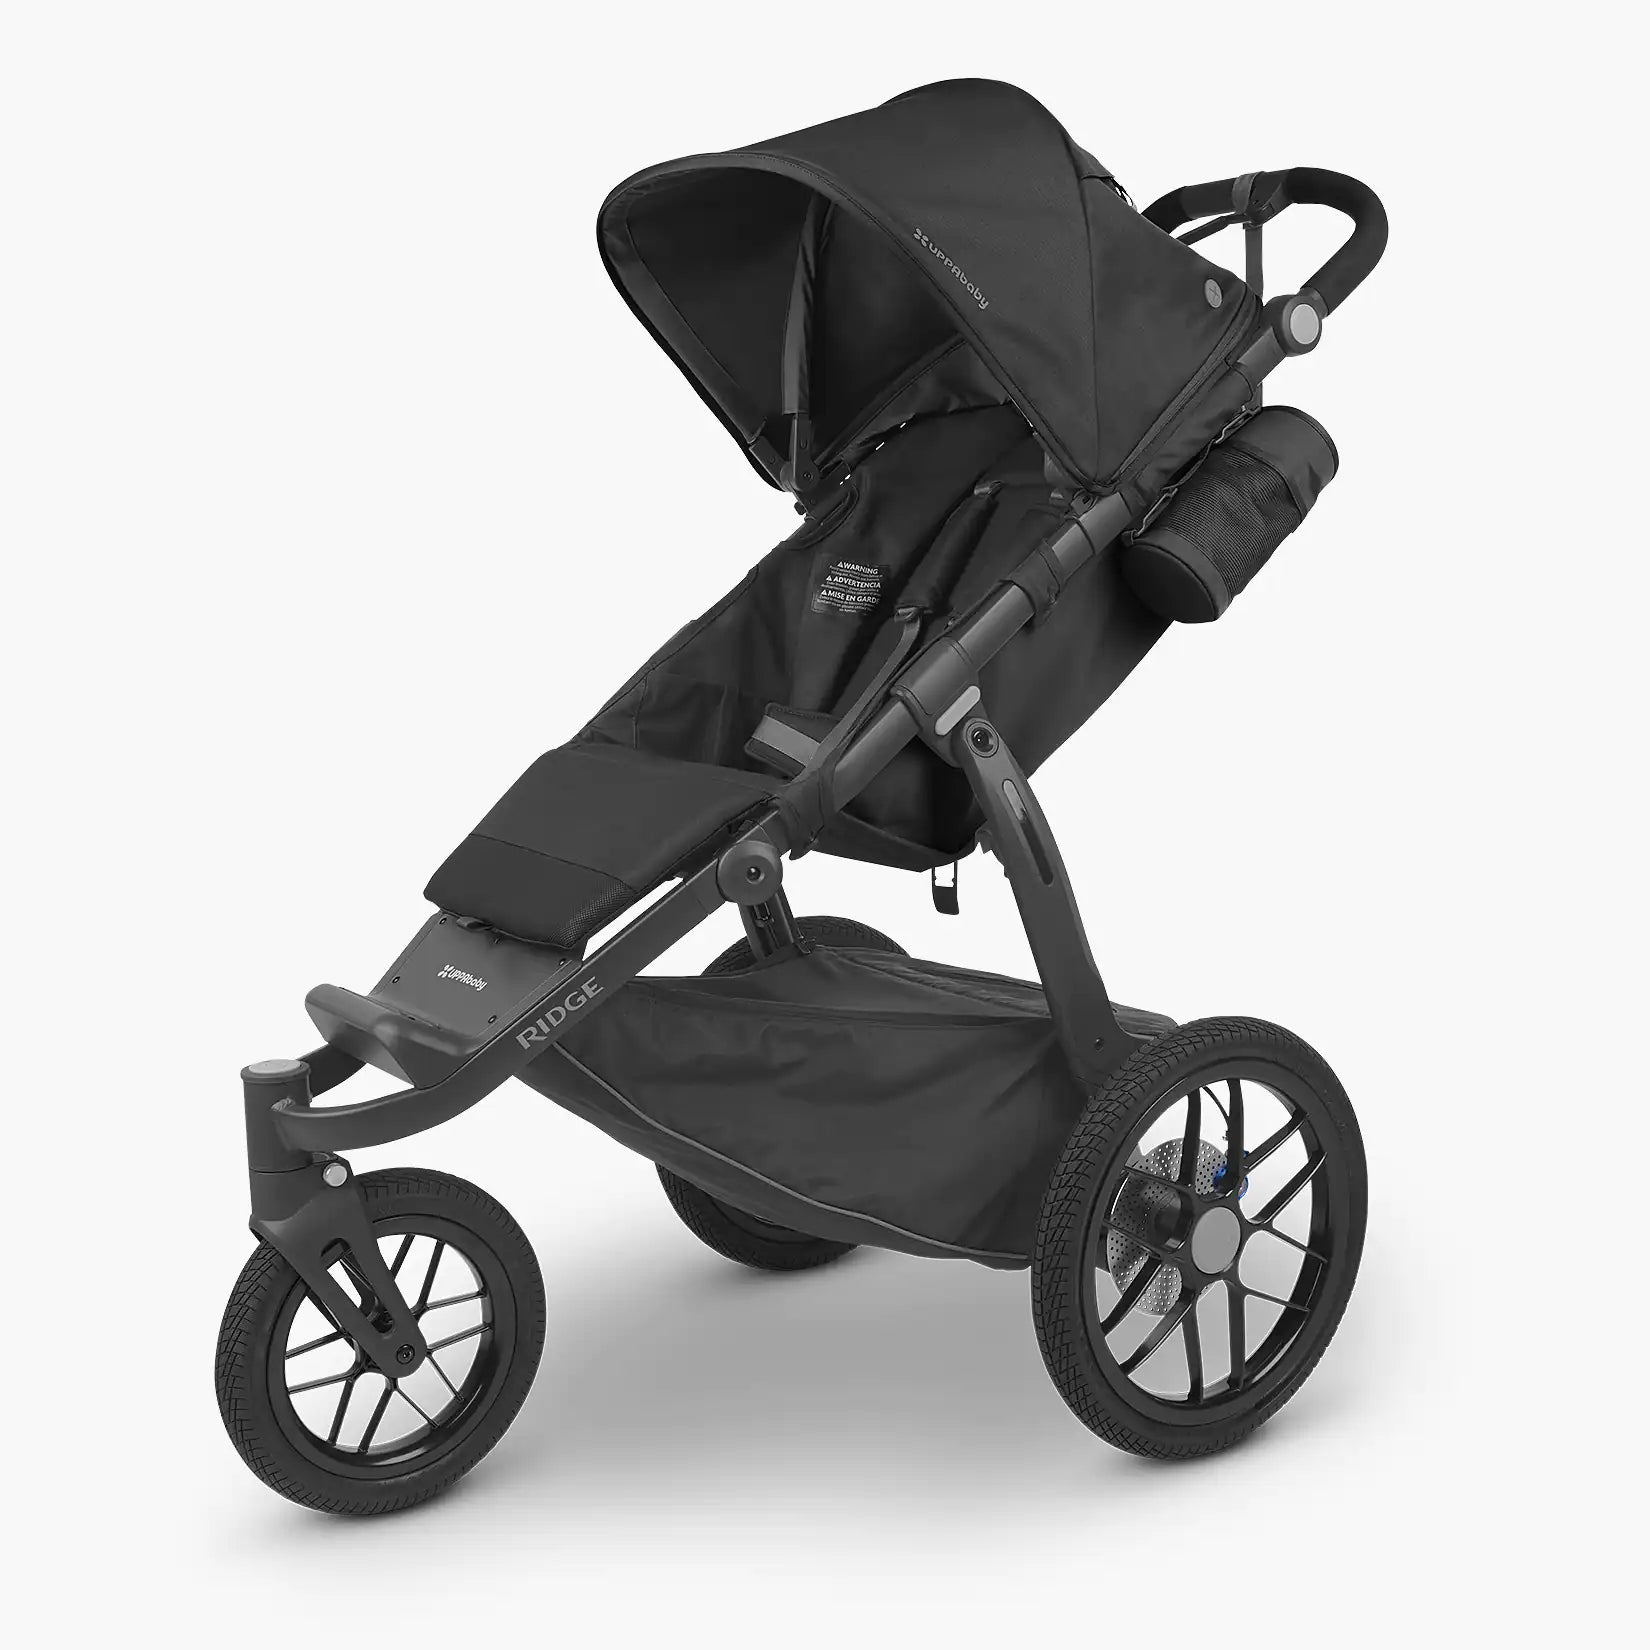 UPPAbaby Ridge Stroller - ANB Baby -810030098560$500 - $1000